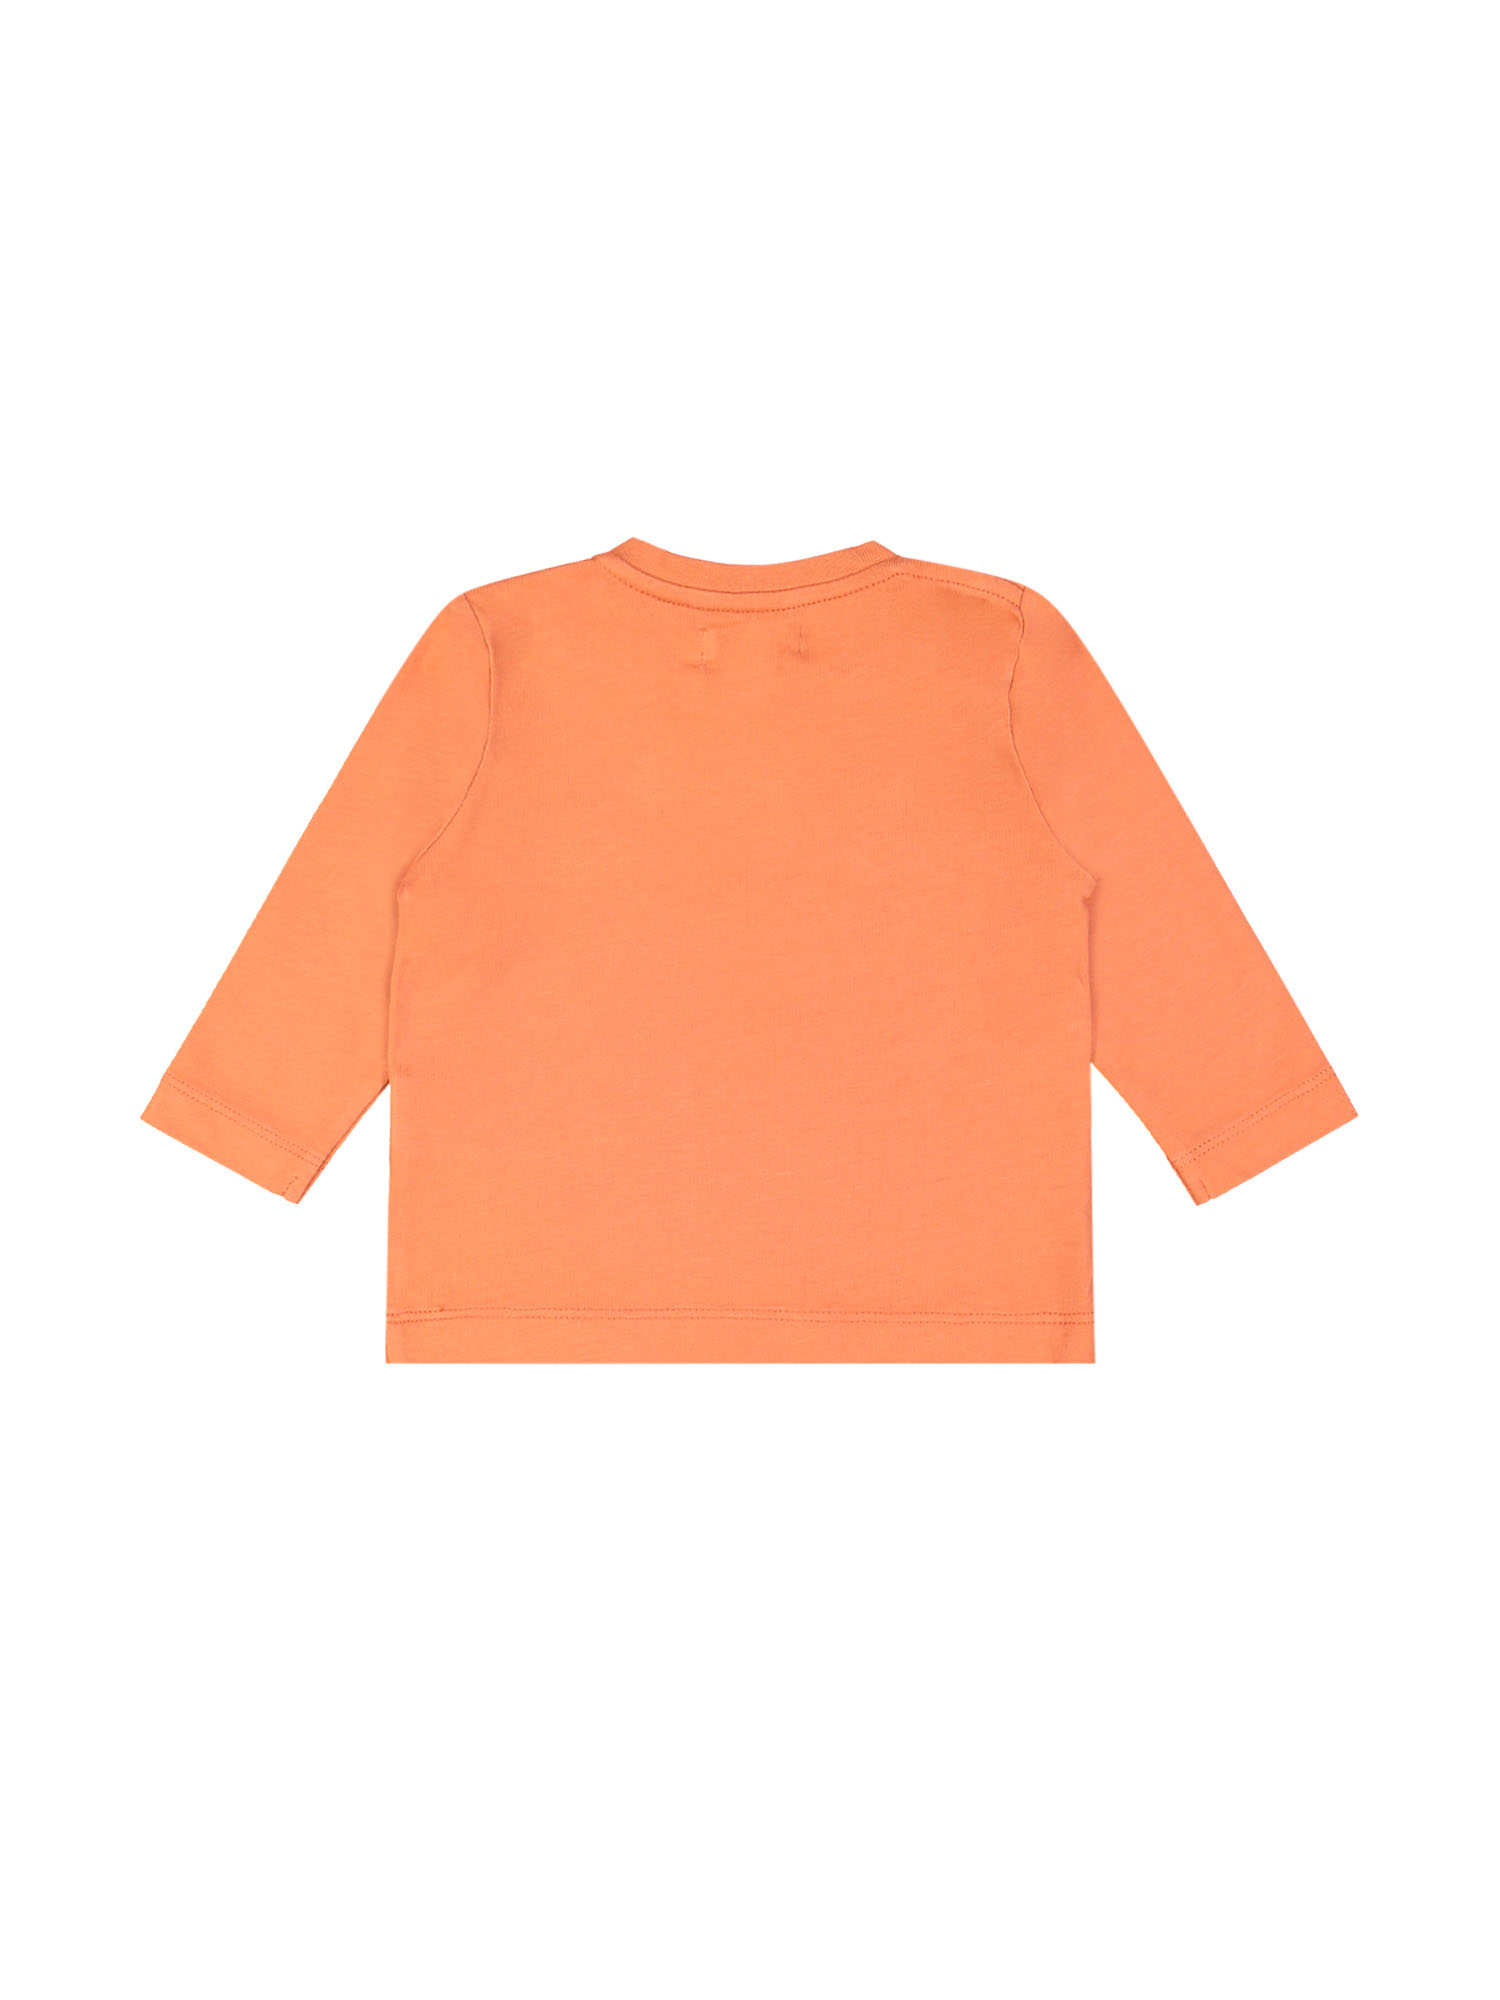 T-shirt mini home alone oranje 12m